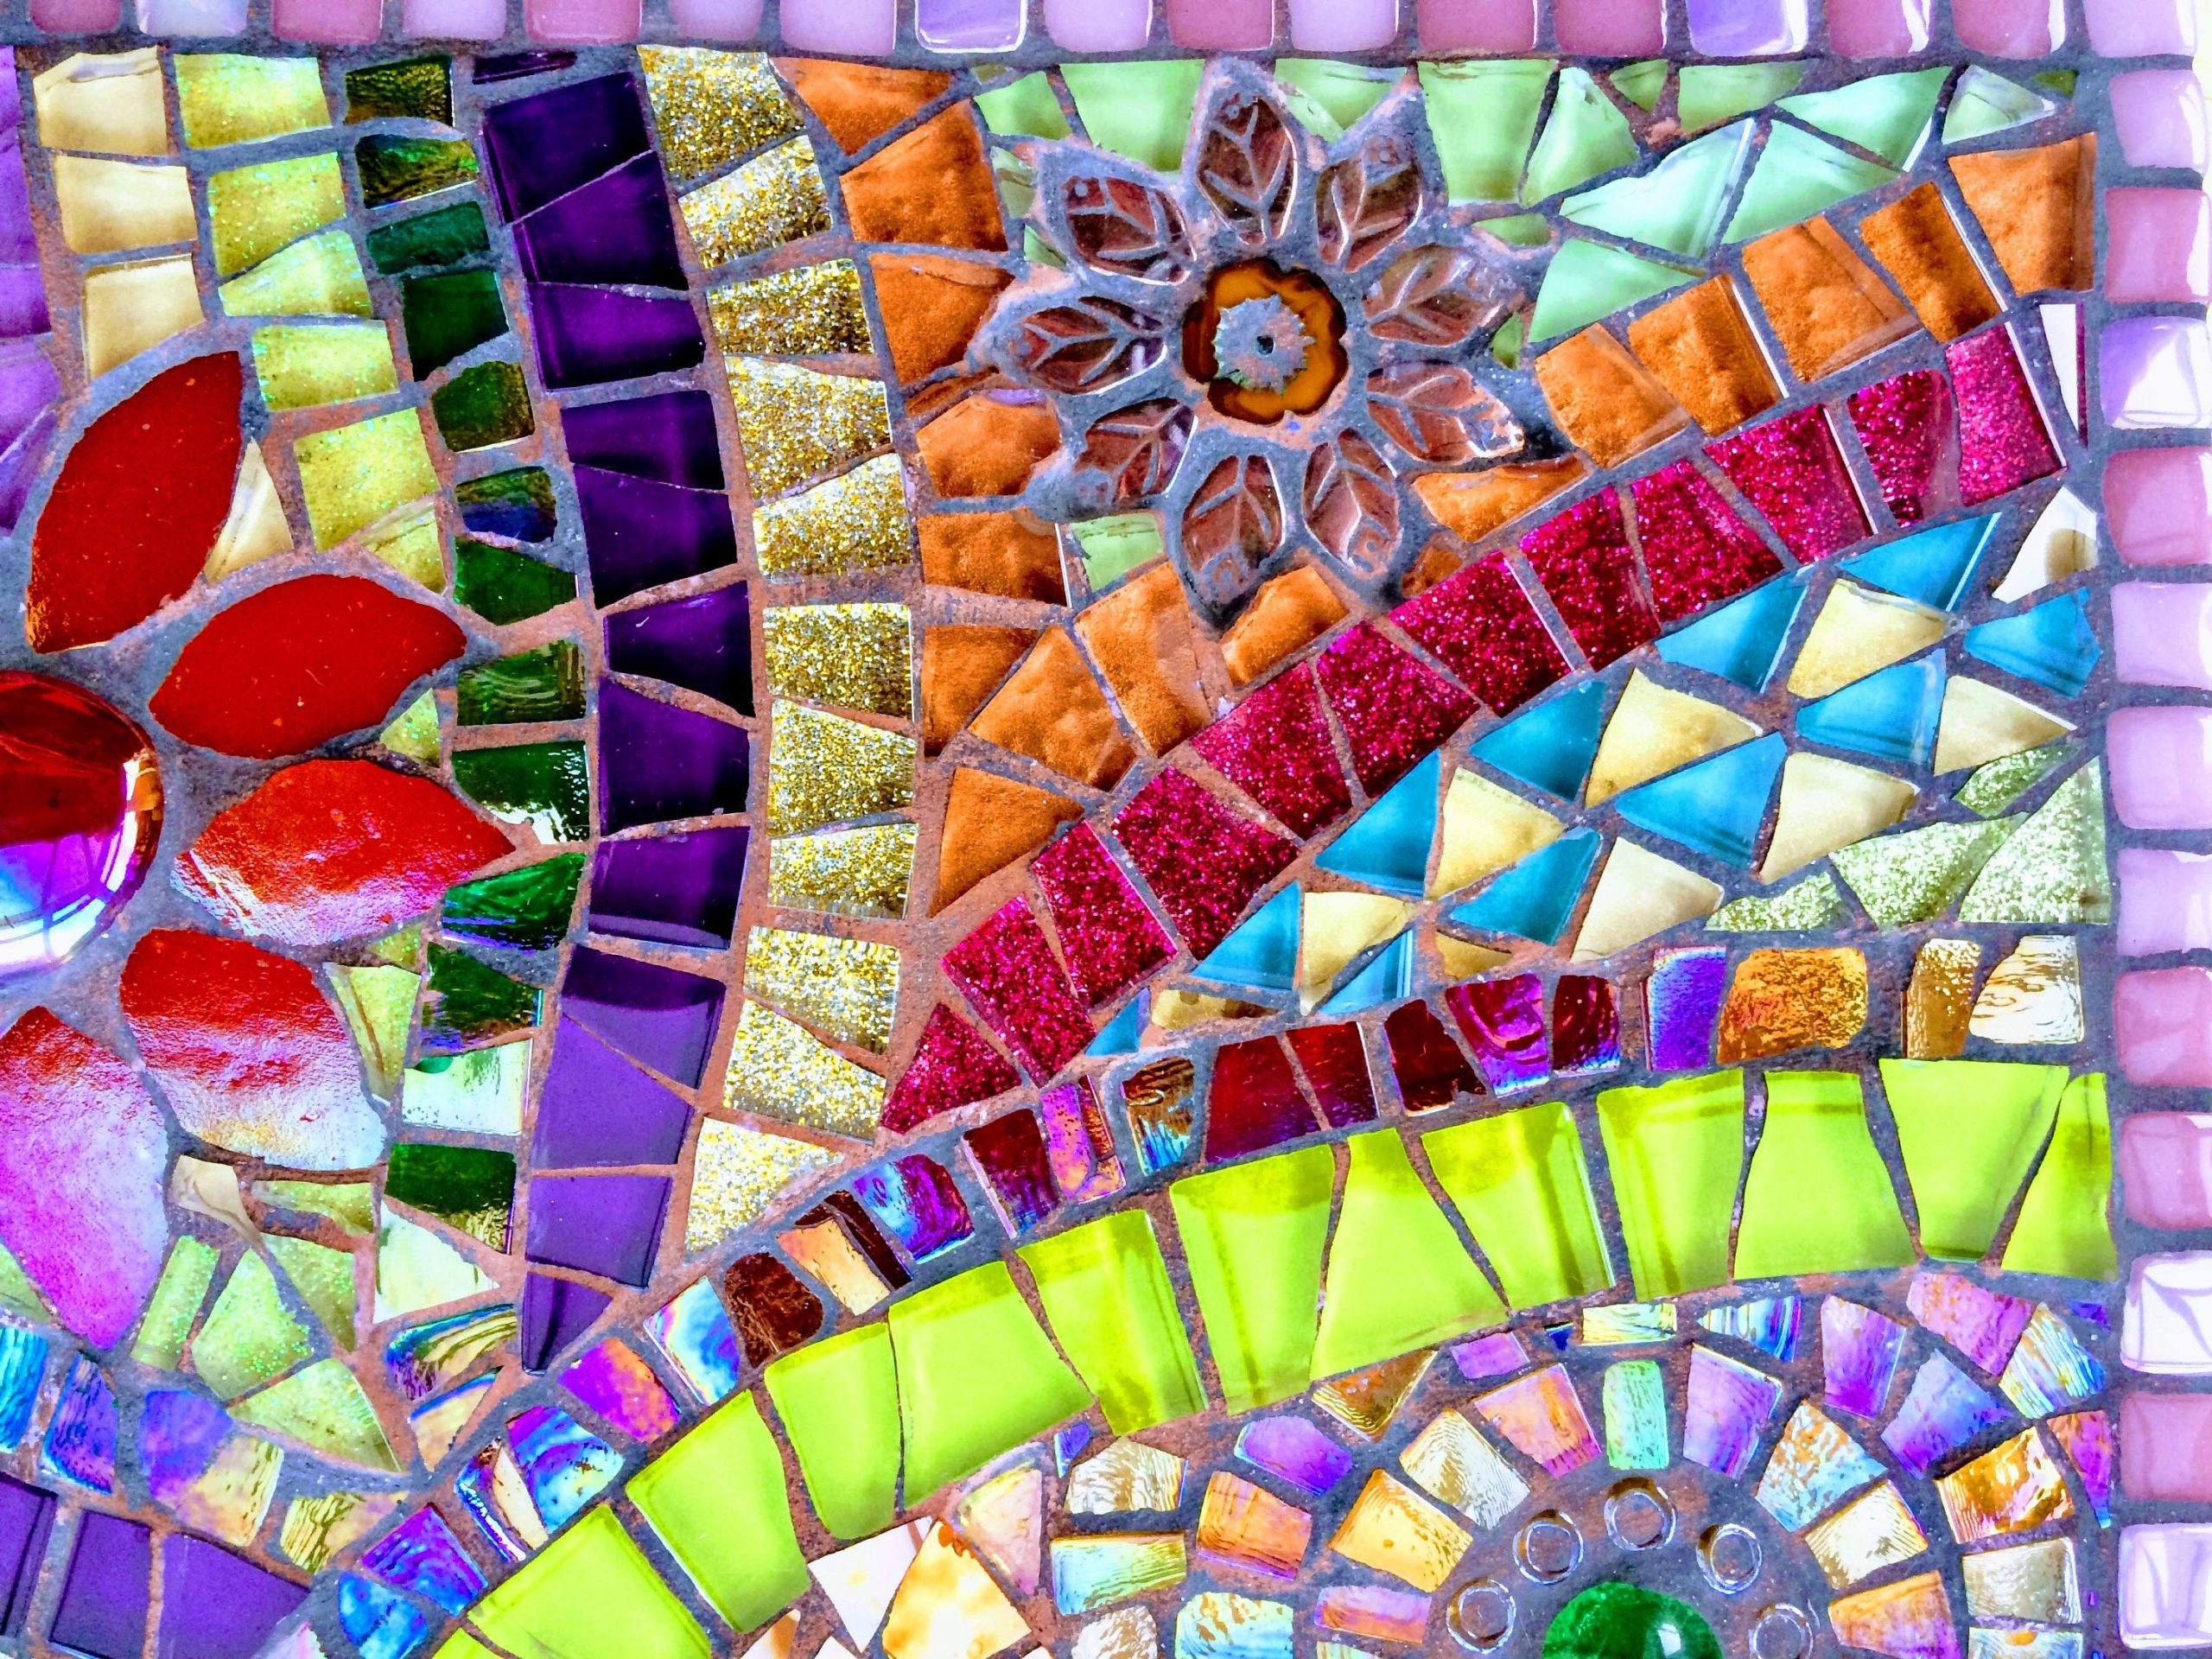 essay on mosaic art